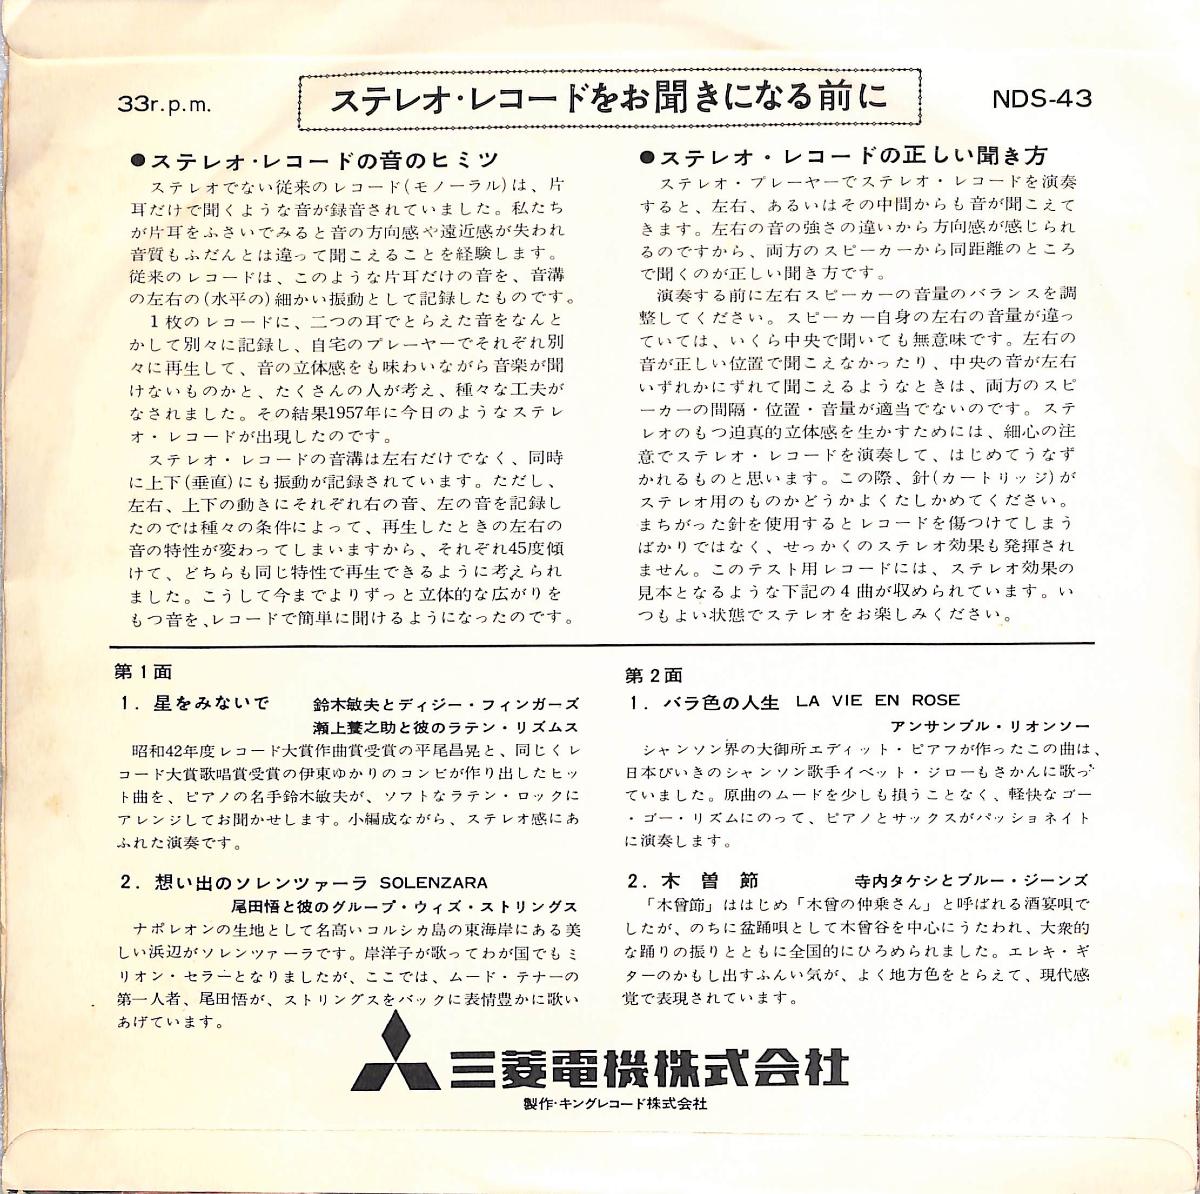 VA - Diatone Mitsubishi Stereophonic Demonstration Test Record